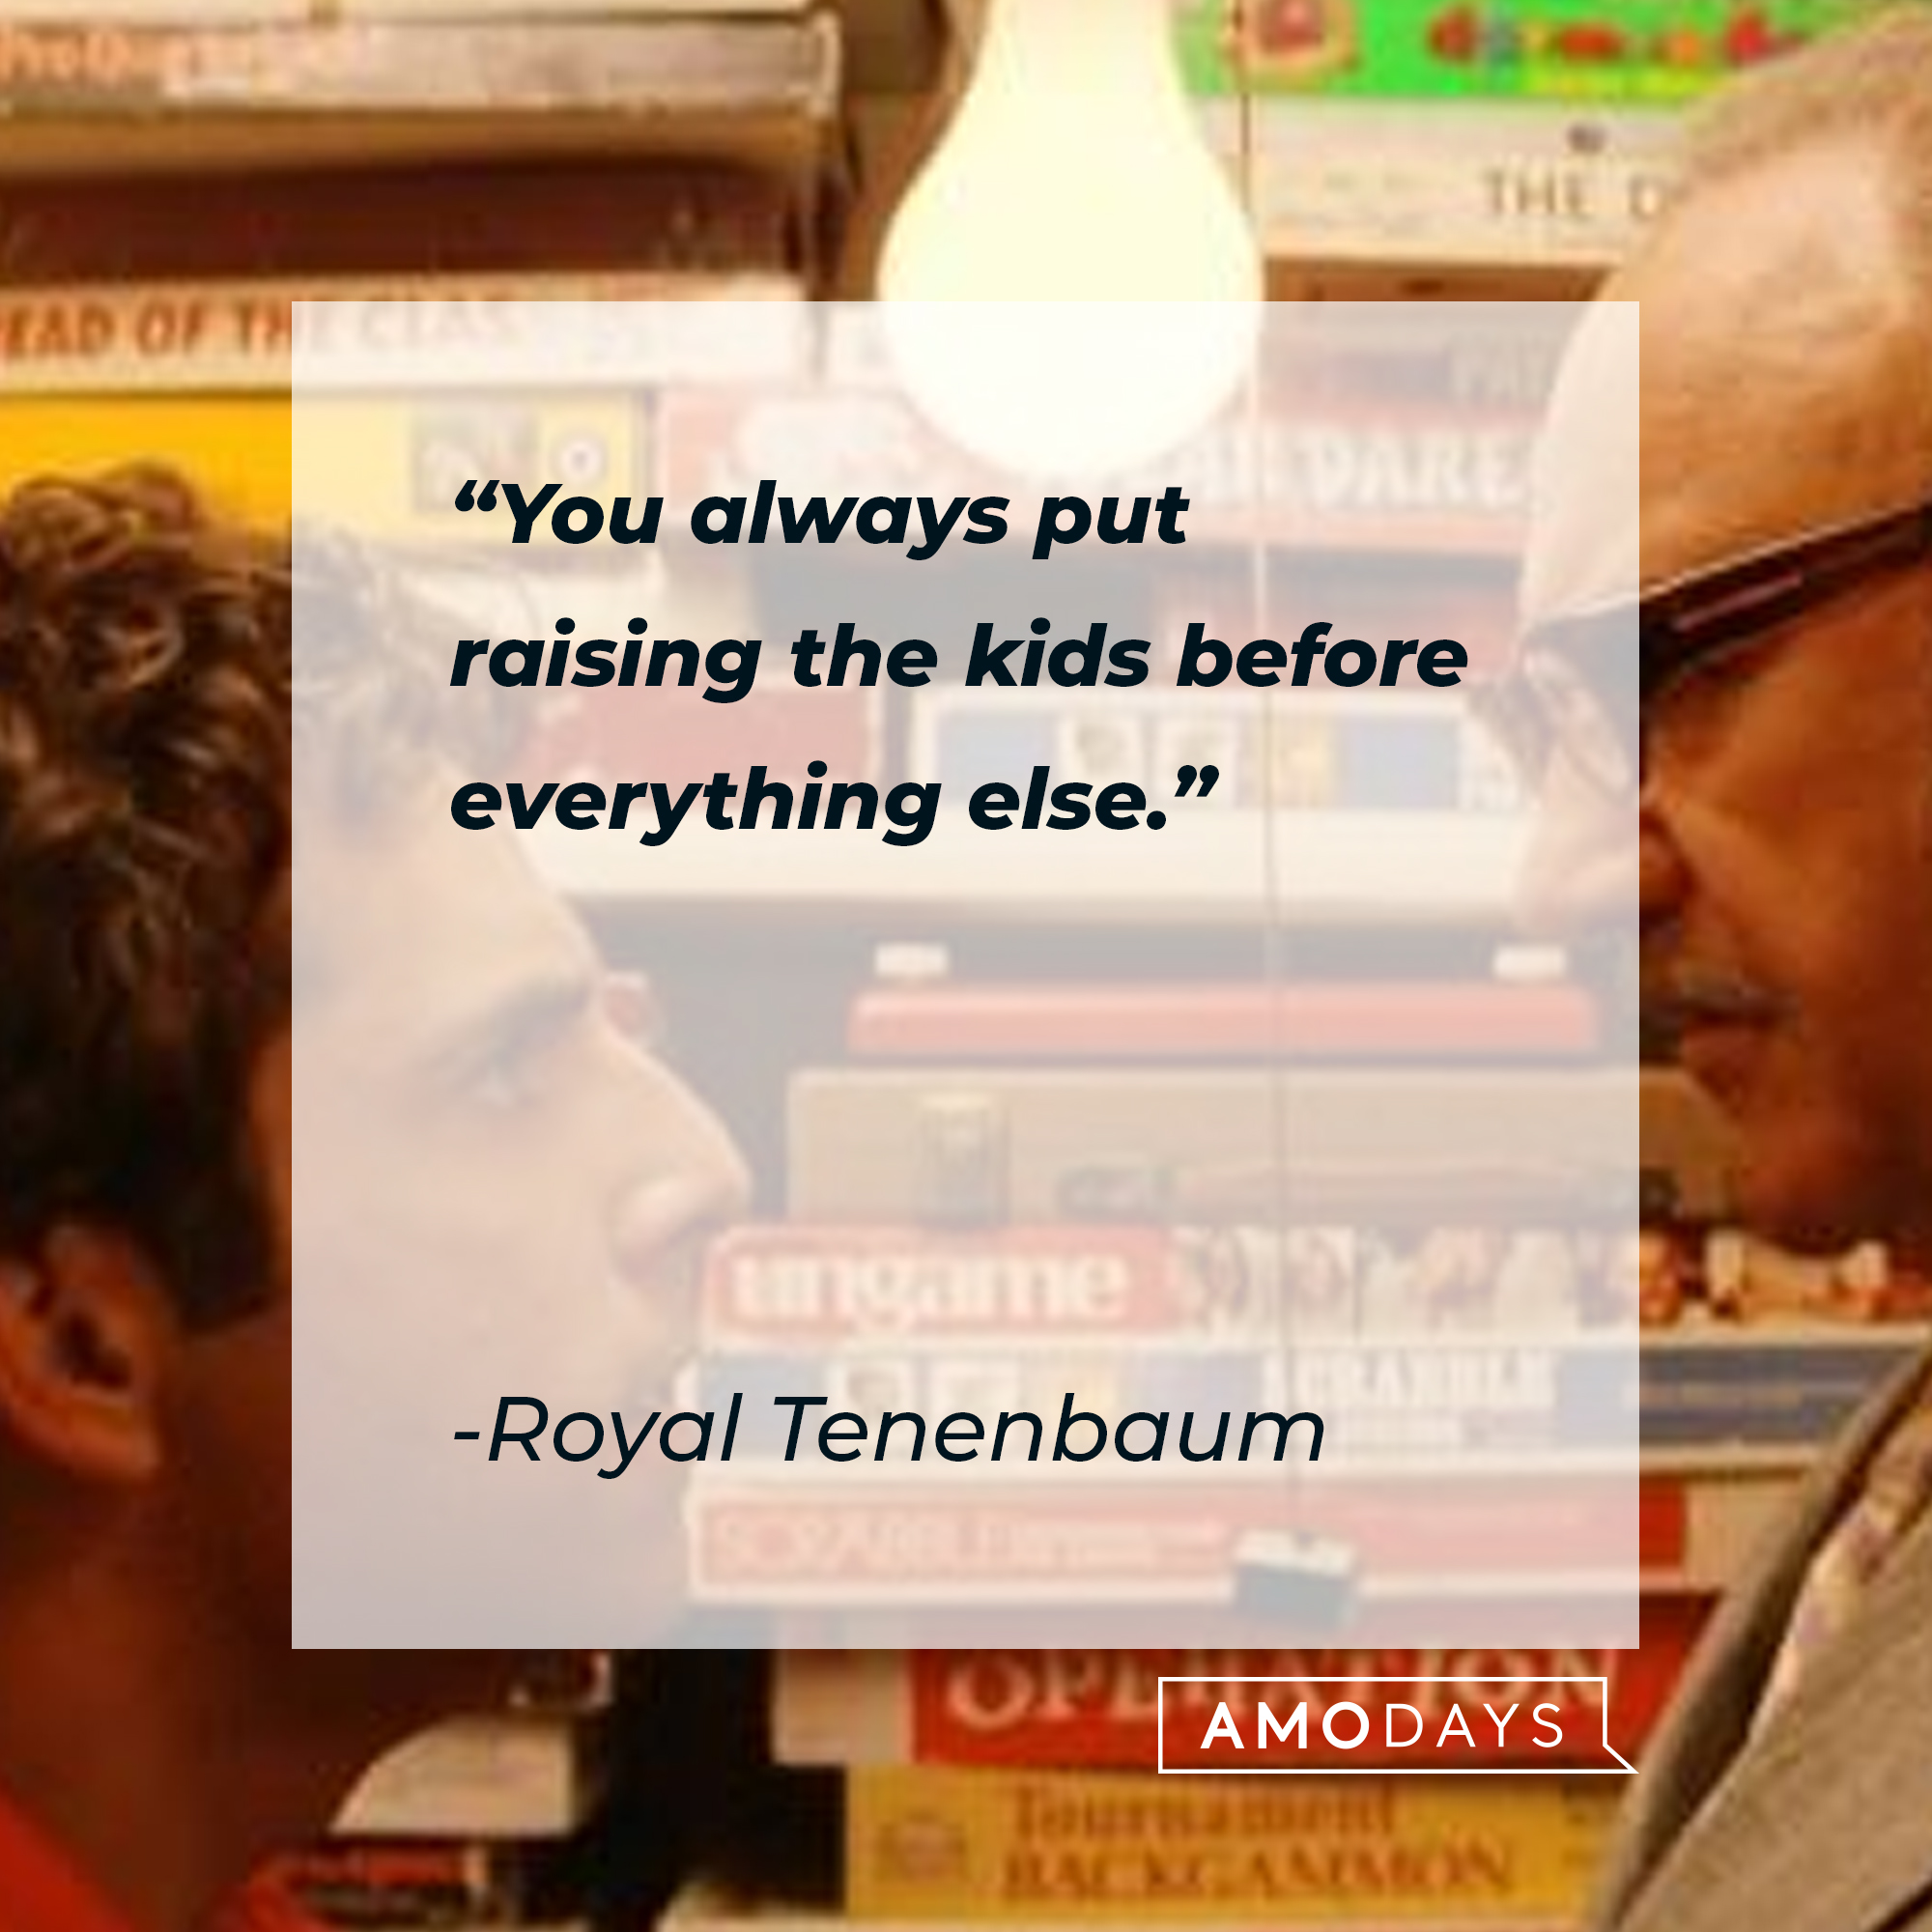 Royal Tenenbaum's quote: "You always put raising the kids before everything else." | Image: AmoDays